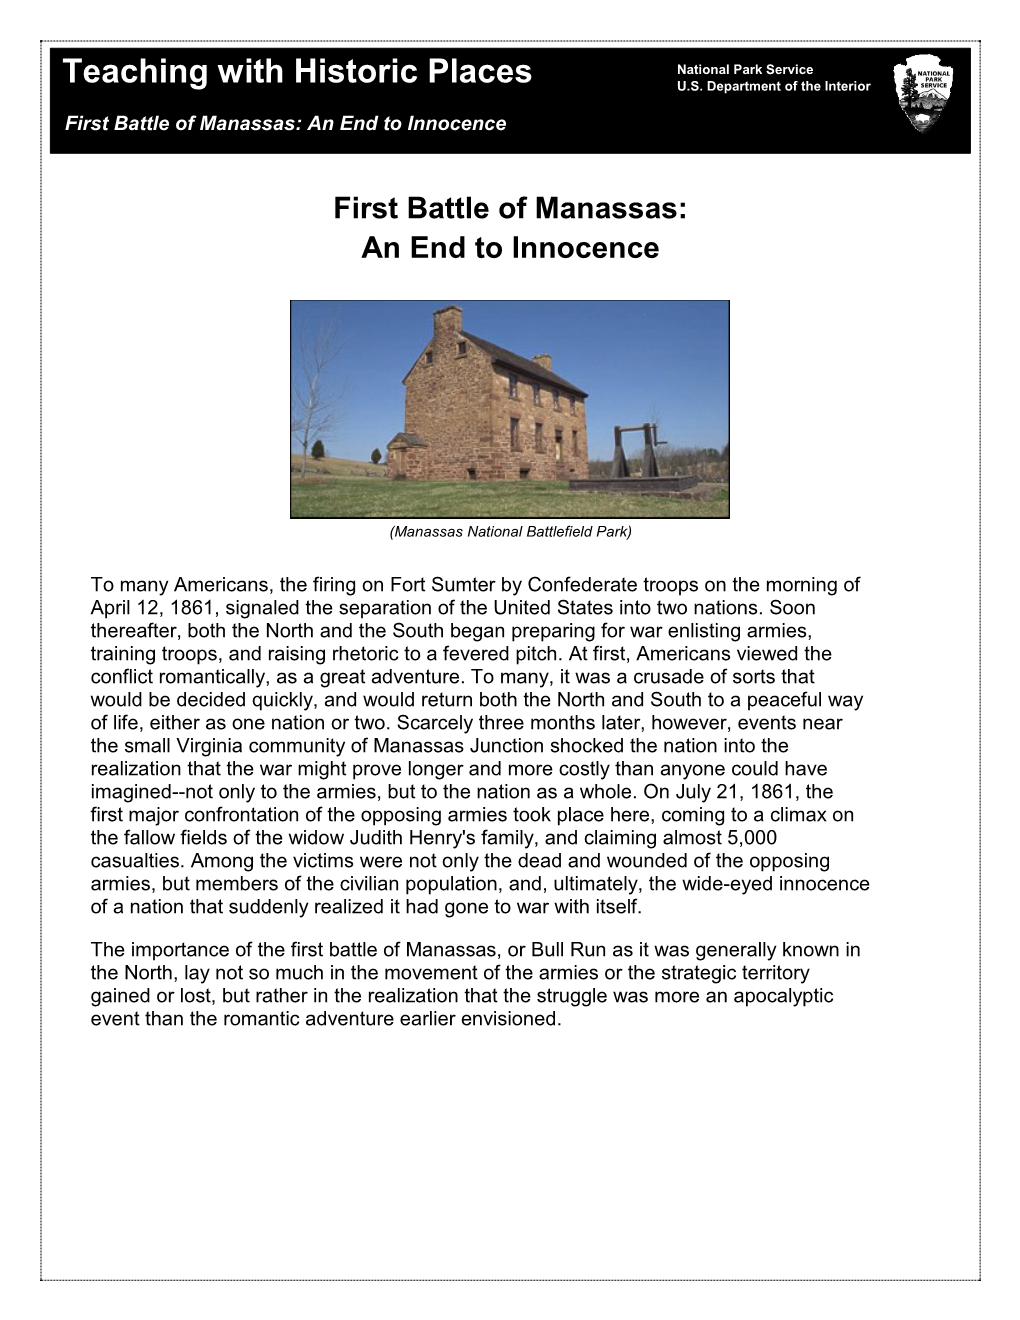 First Battle of Manassas: an End to Innocence